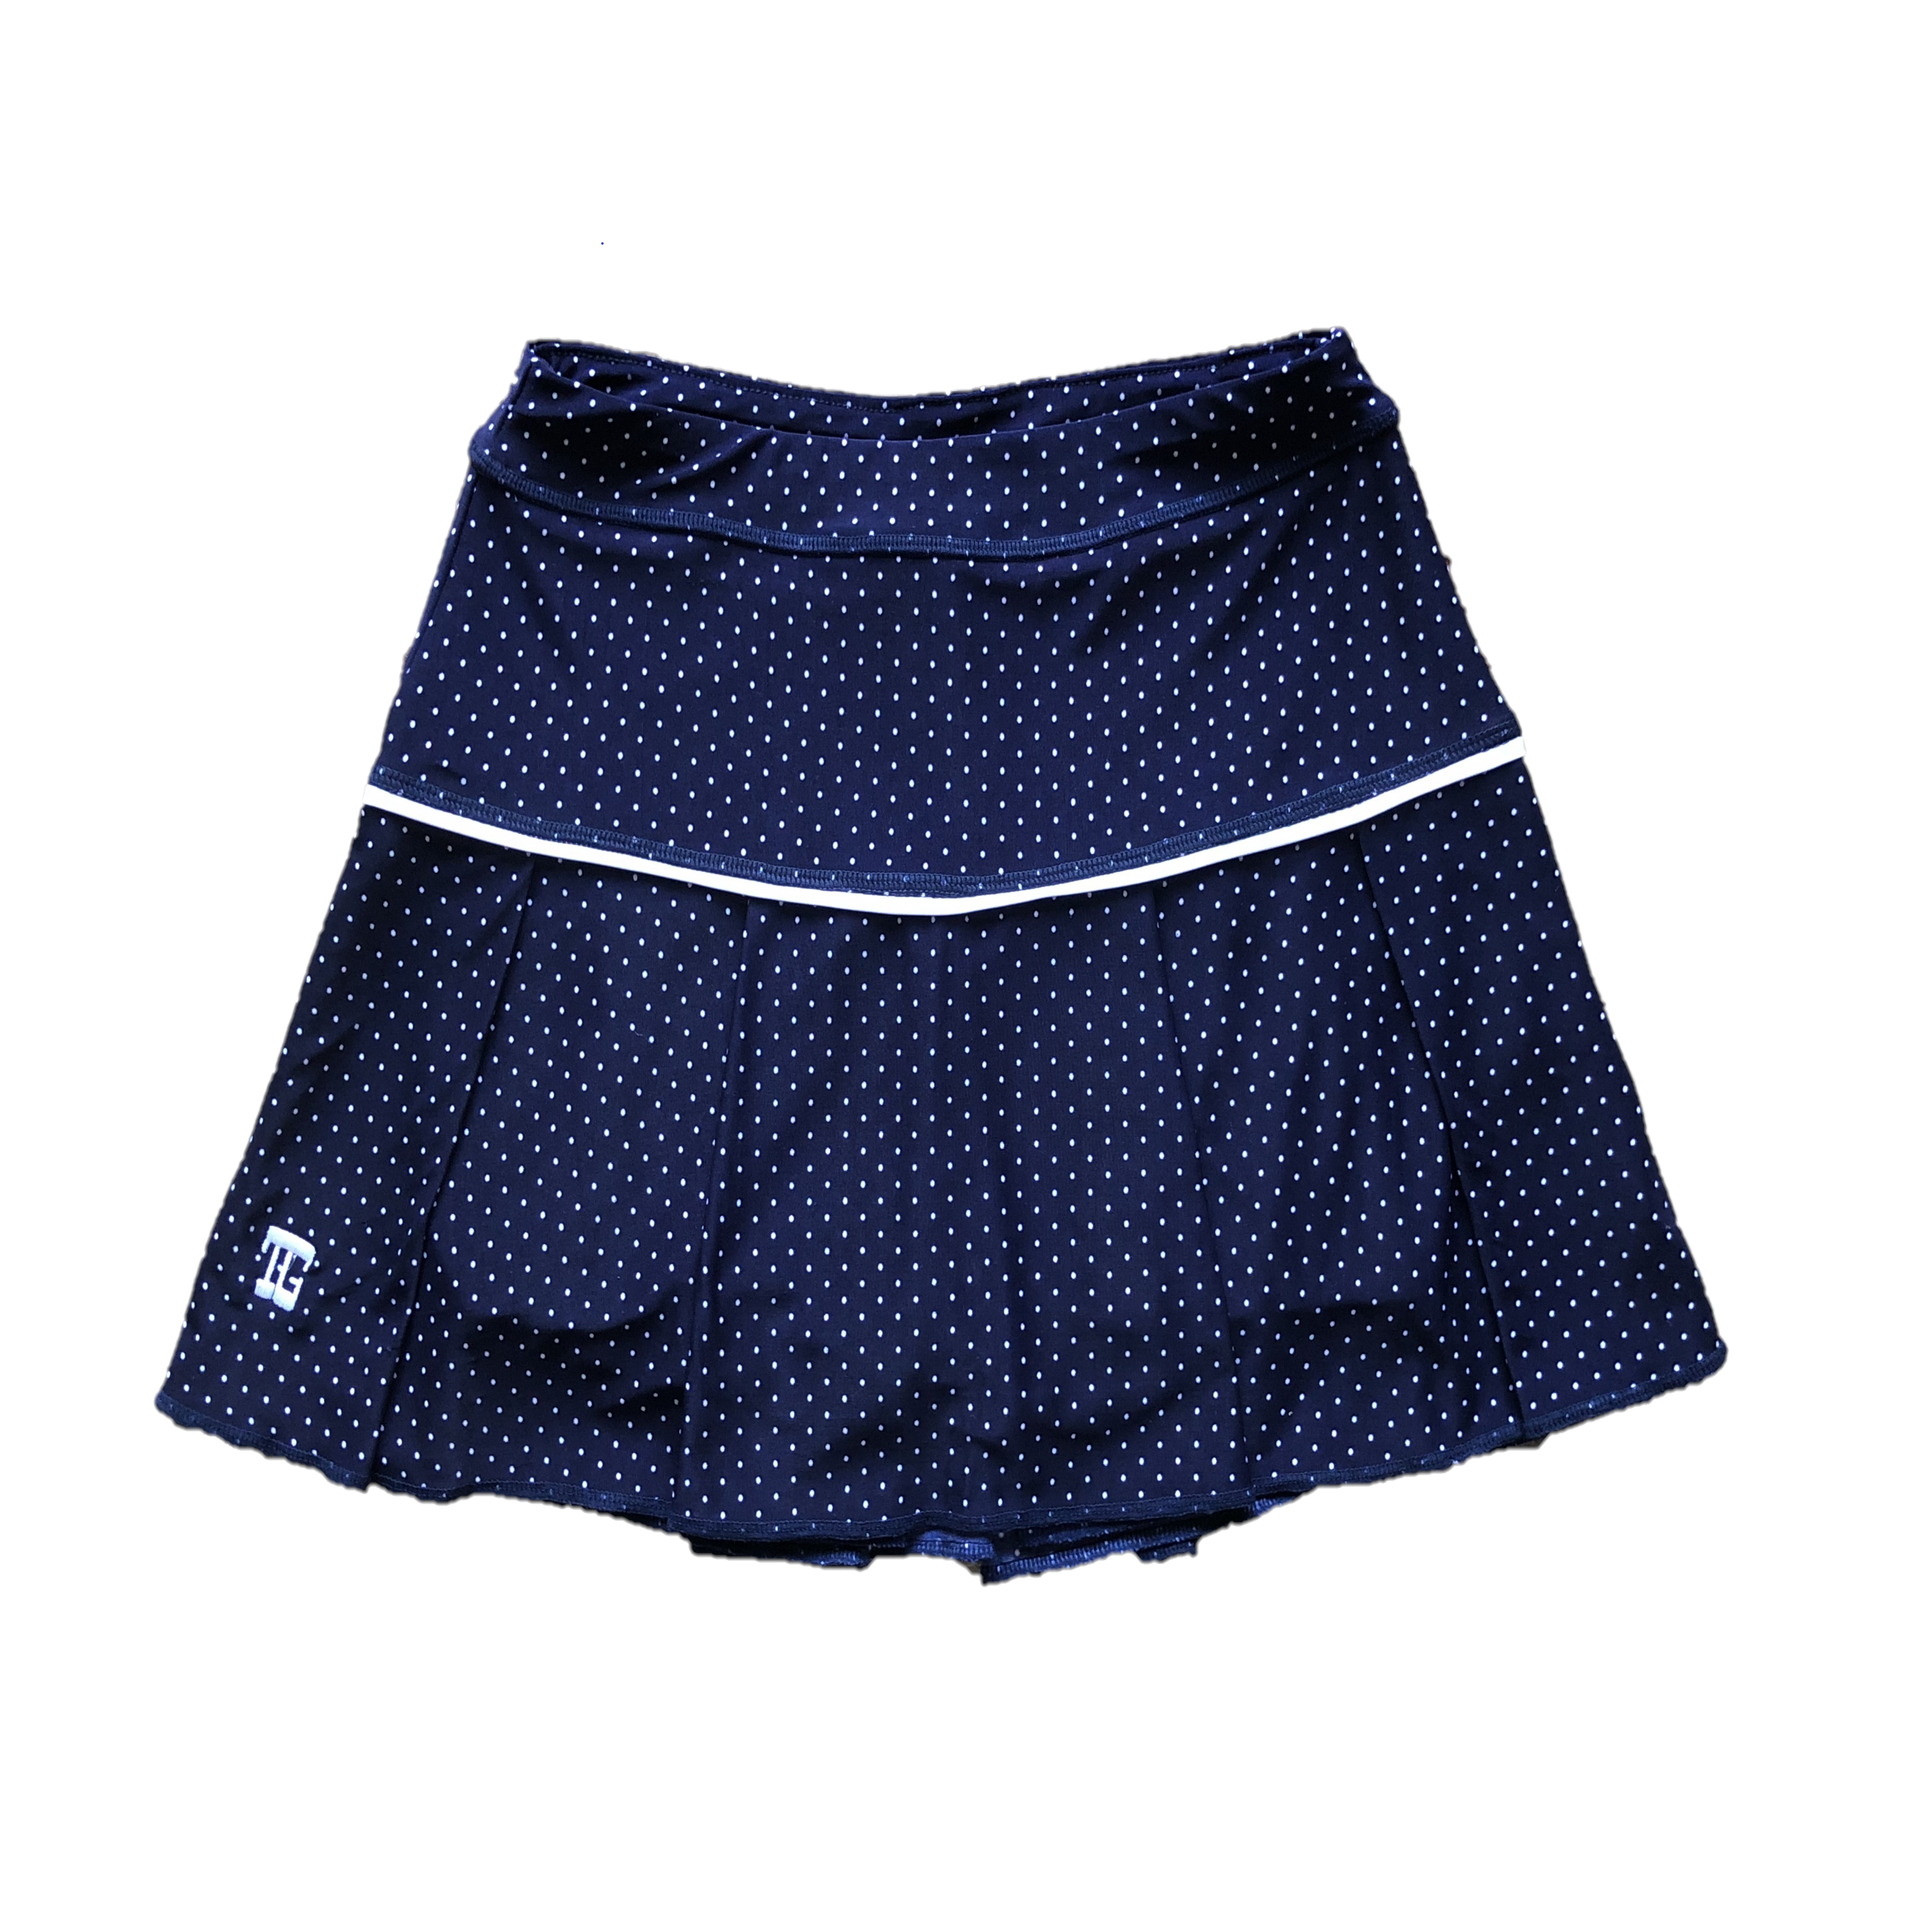 LS-074 || Skirt Navy Blue with Small White Polka Dots White Horizontal Waist Beading and 4 Box Pleats